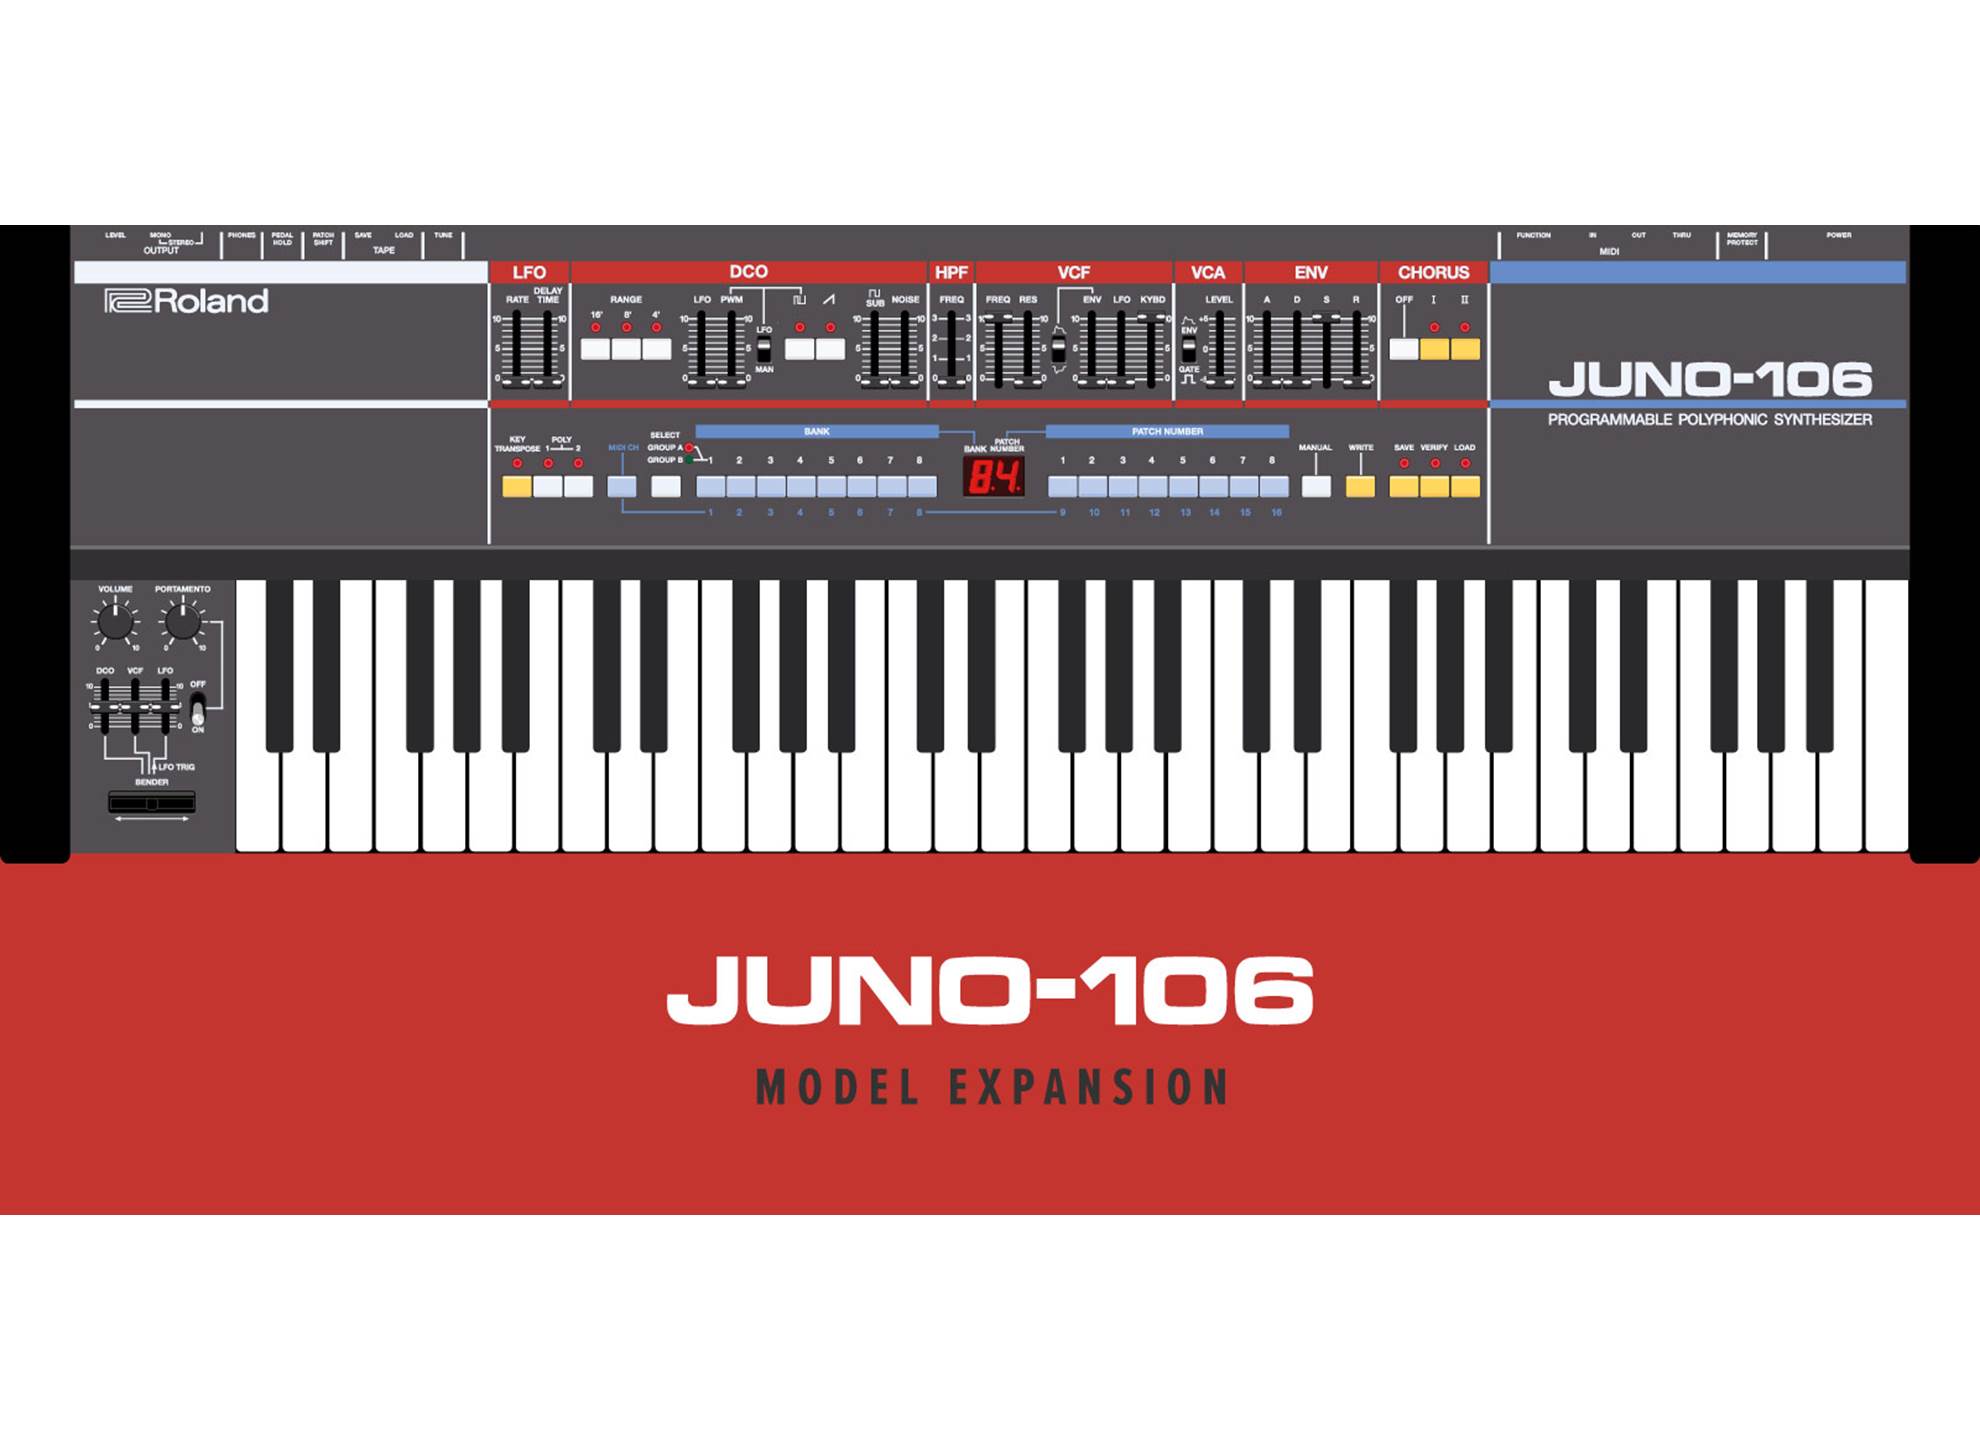 Cloud Juno-106 Model Expansion